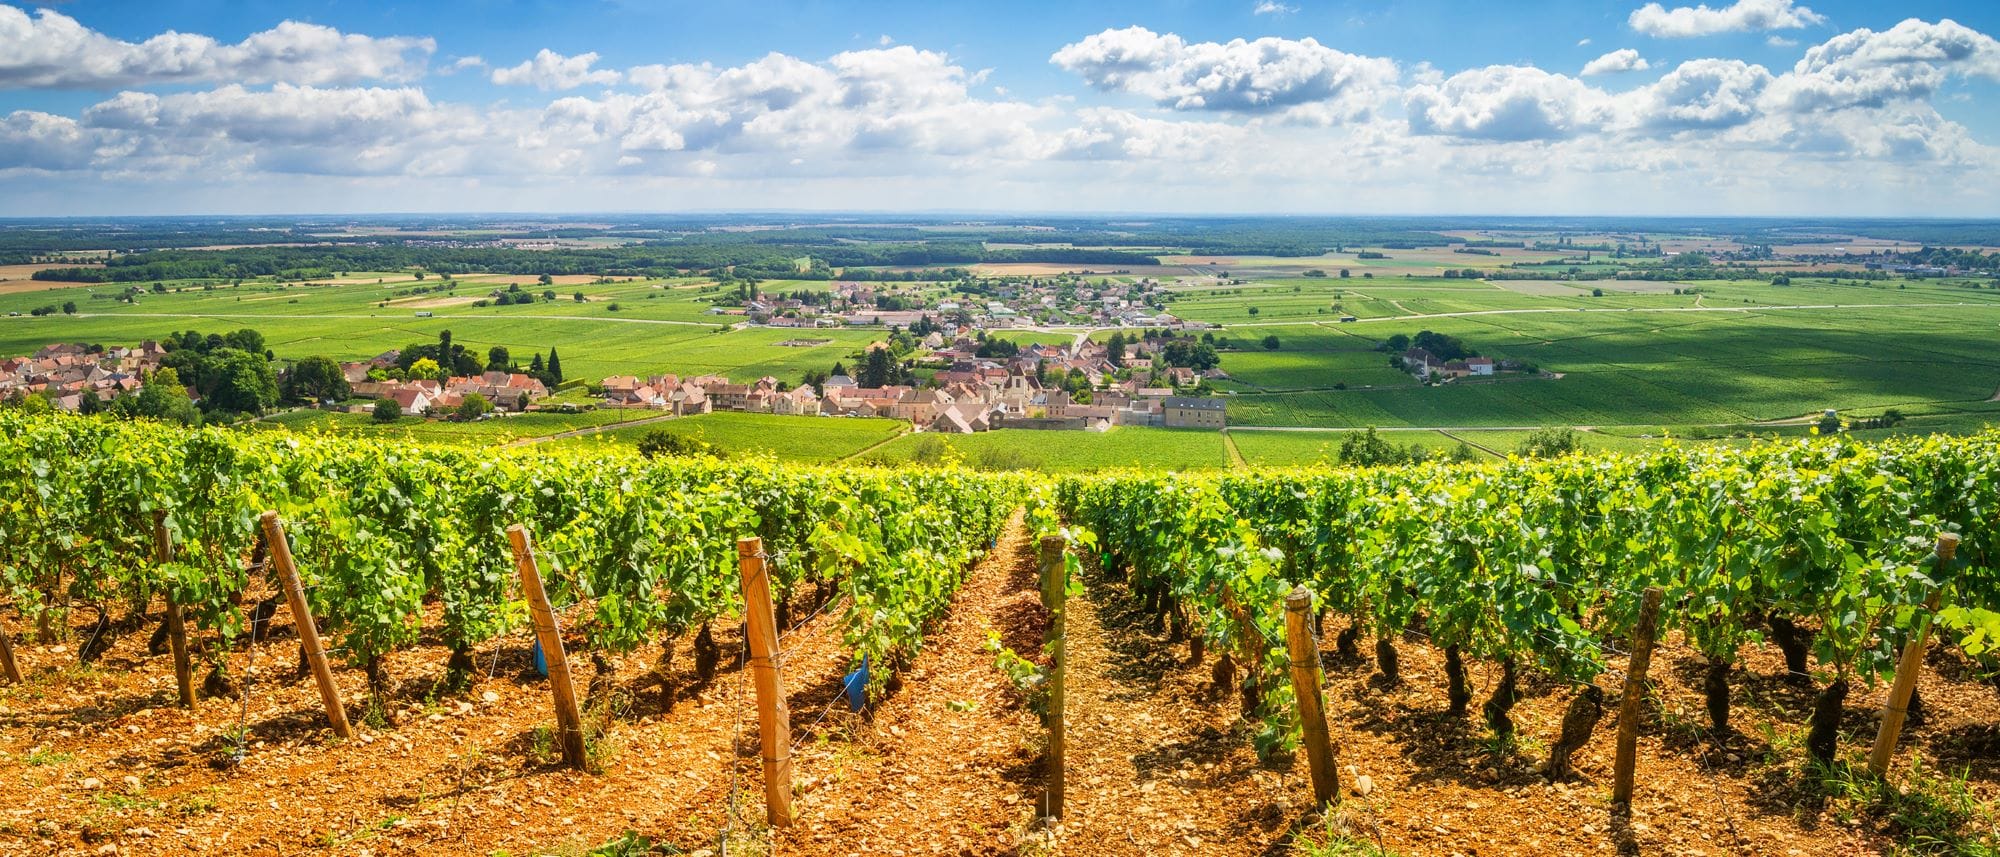 Vineyard in Burgundy